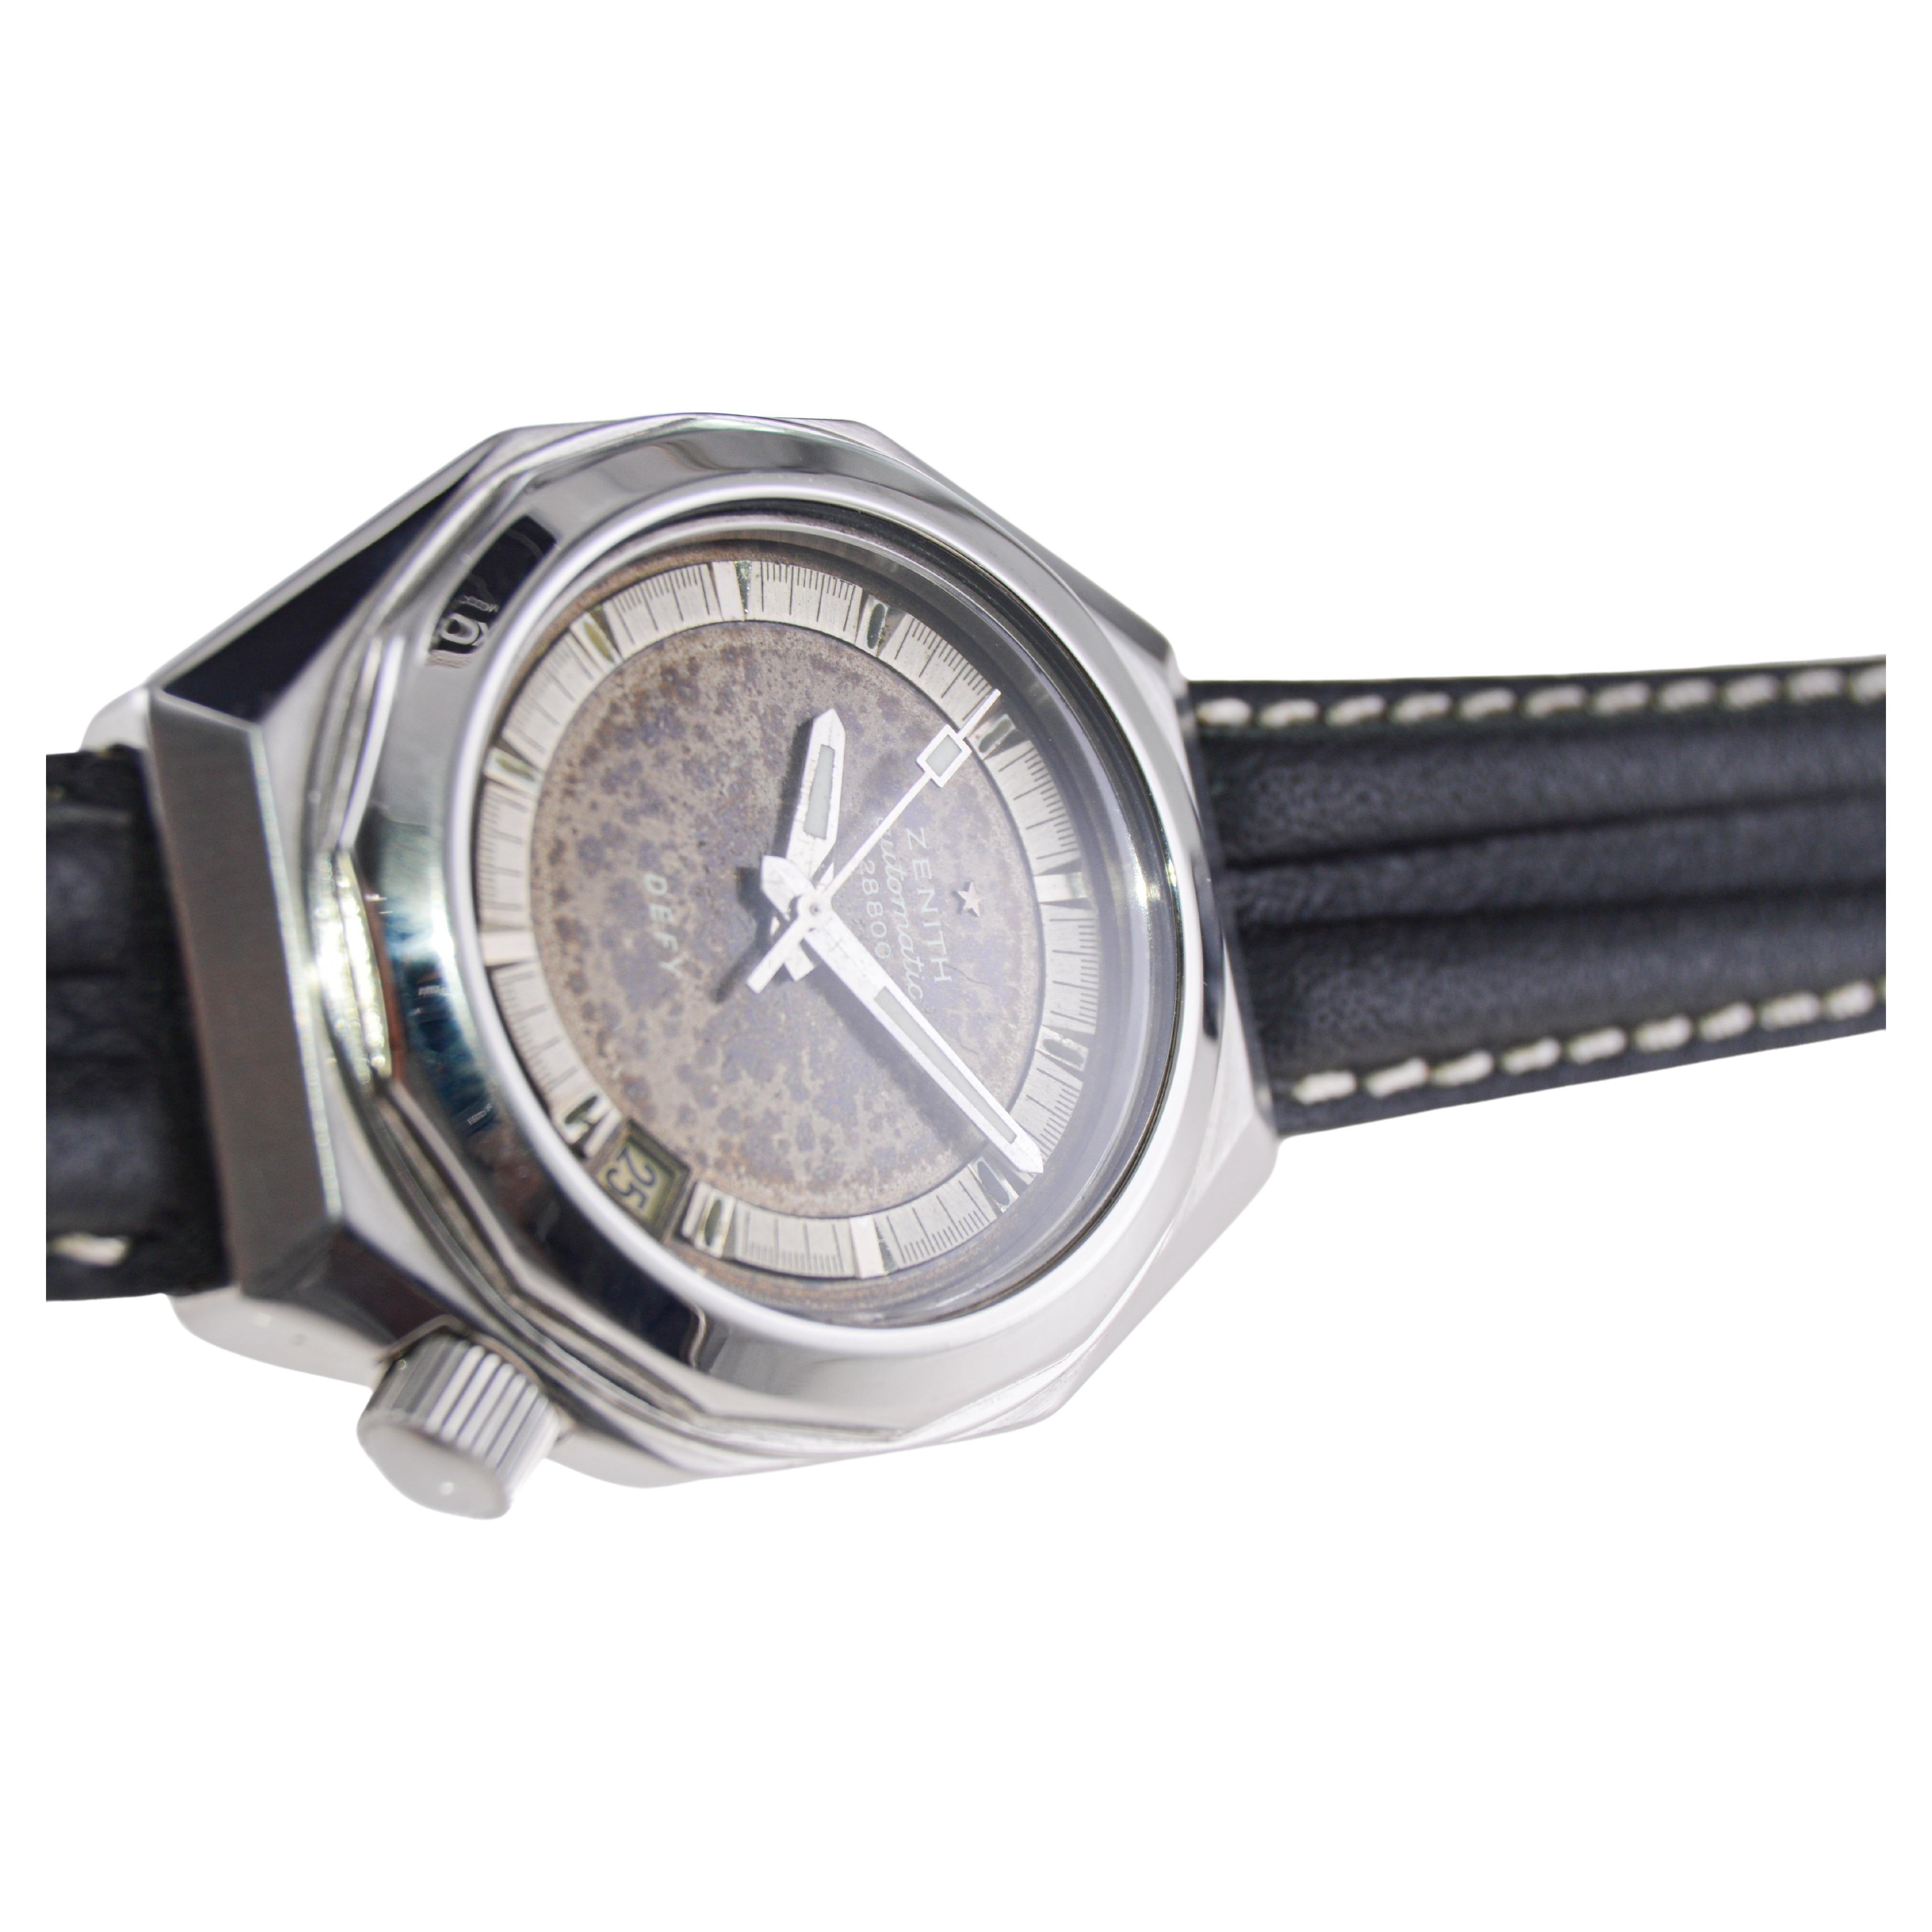 Zenith Edelstahl Moderne Sport Automatik-Armbanduhr 1960er Jahre Seltenes Modell im Angebot 4